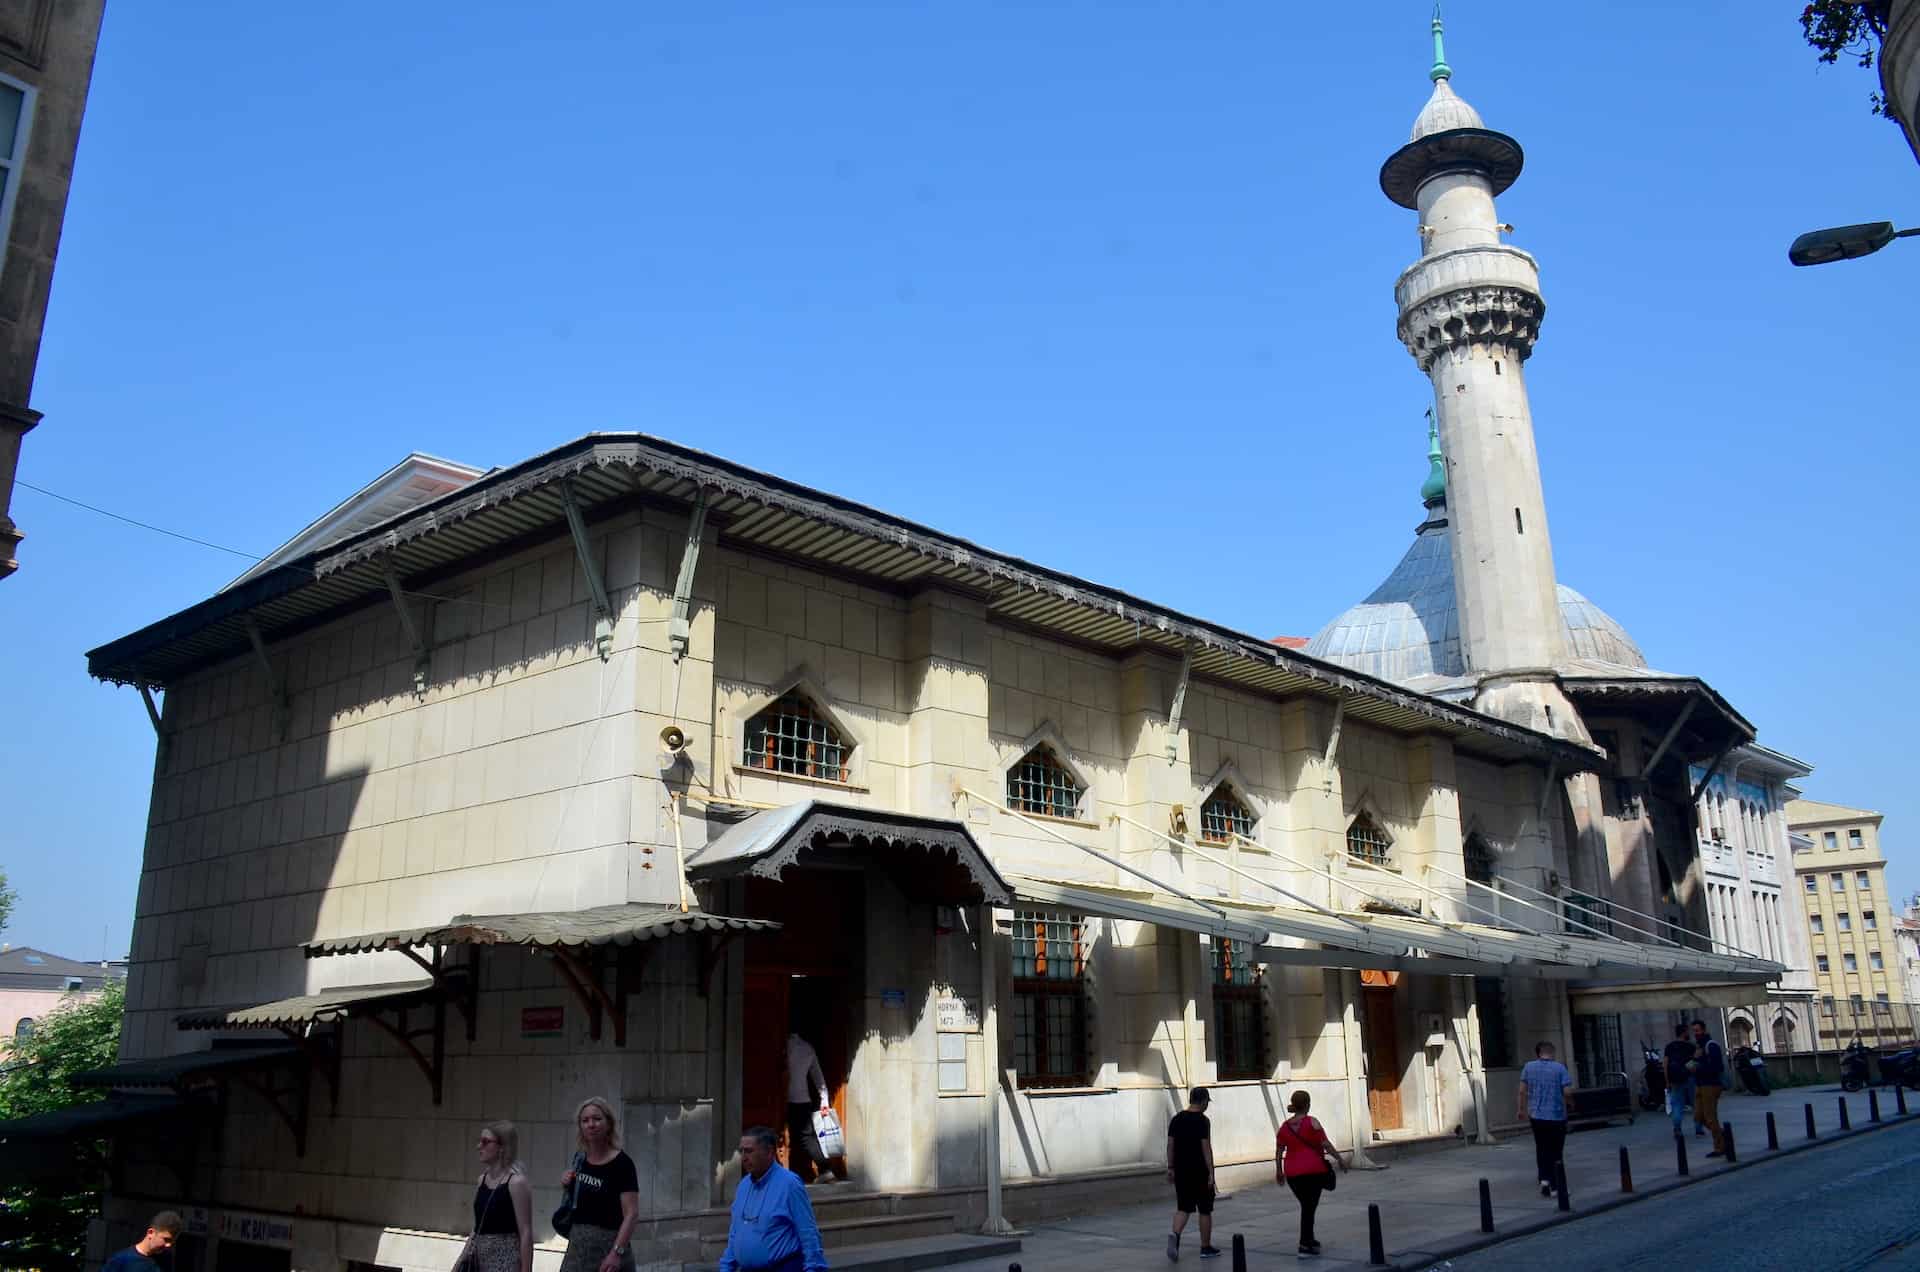 Hobyar Mosque in Sirkeci, Istanbul, Turkey